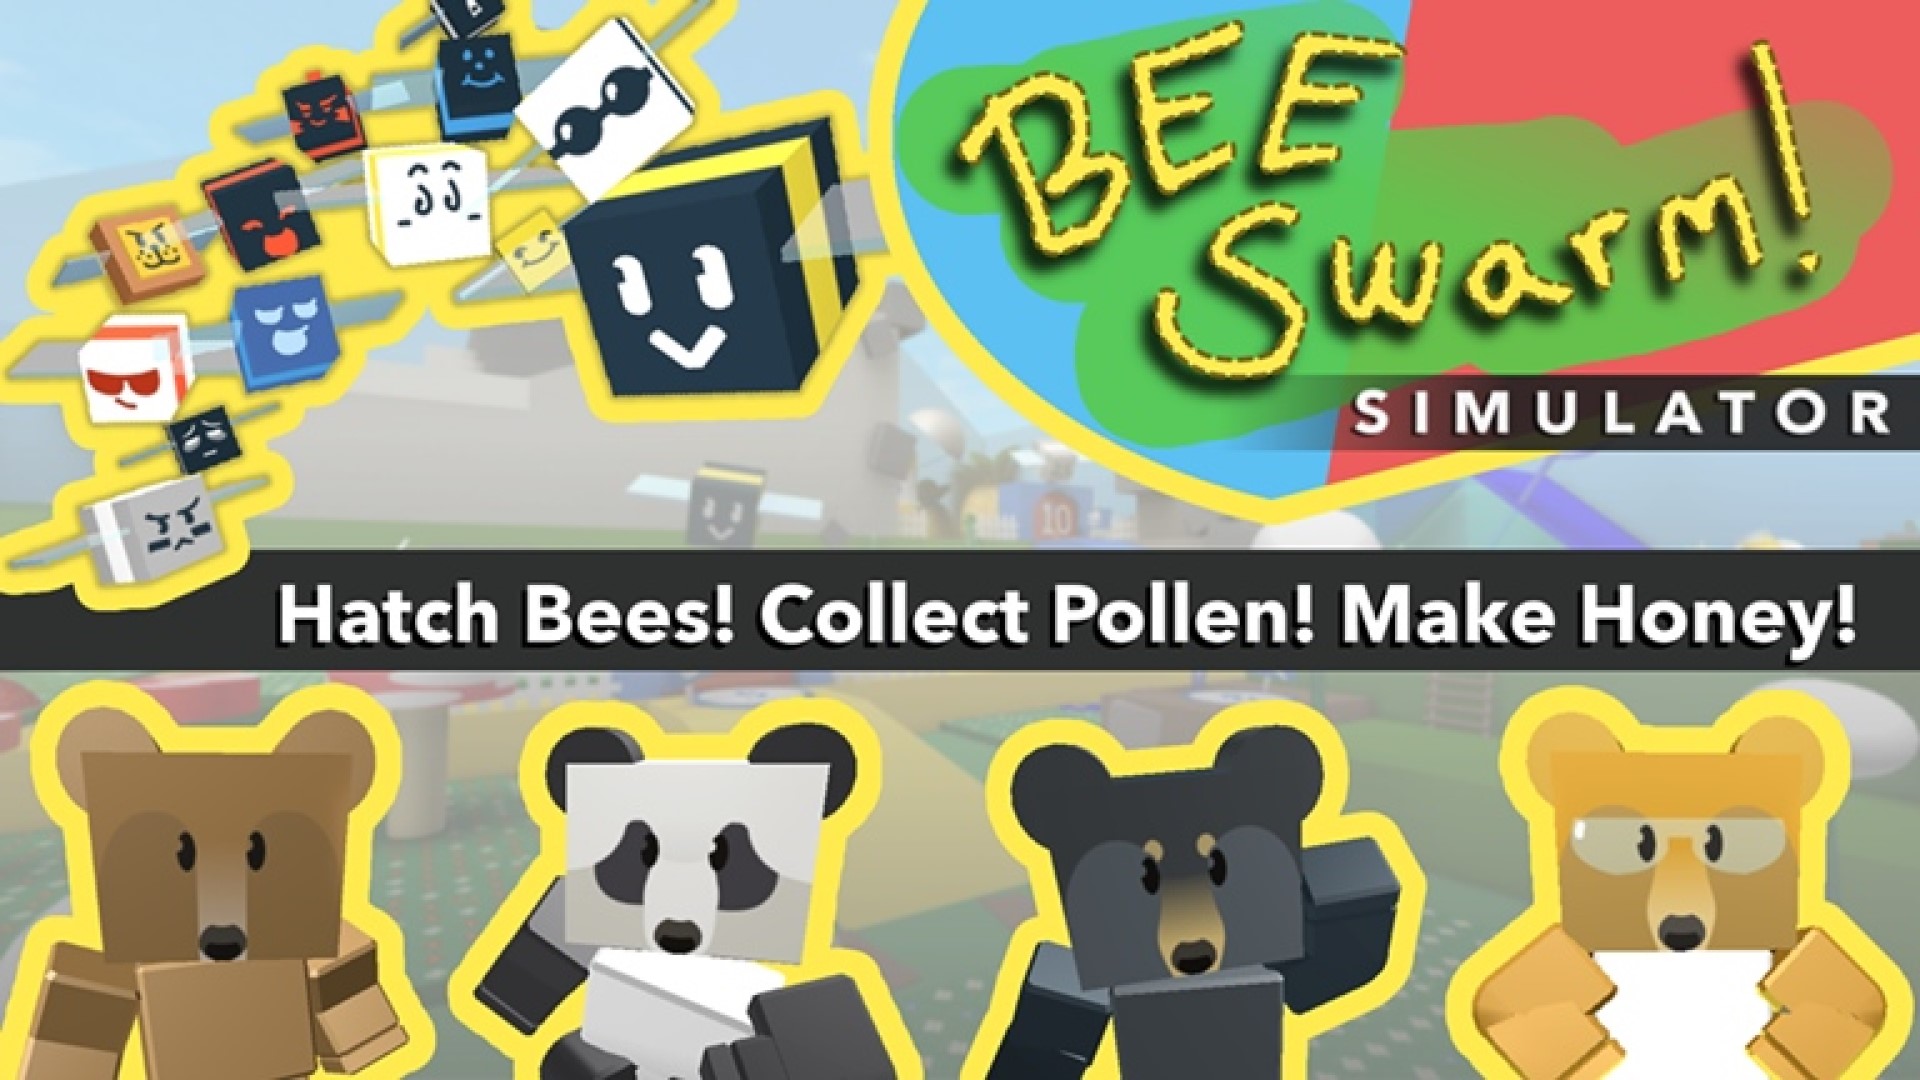 Bee Swarm Simulator codes honey, buffs, and tickets Pocket Tactics